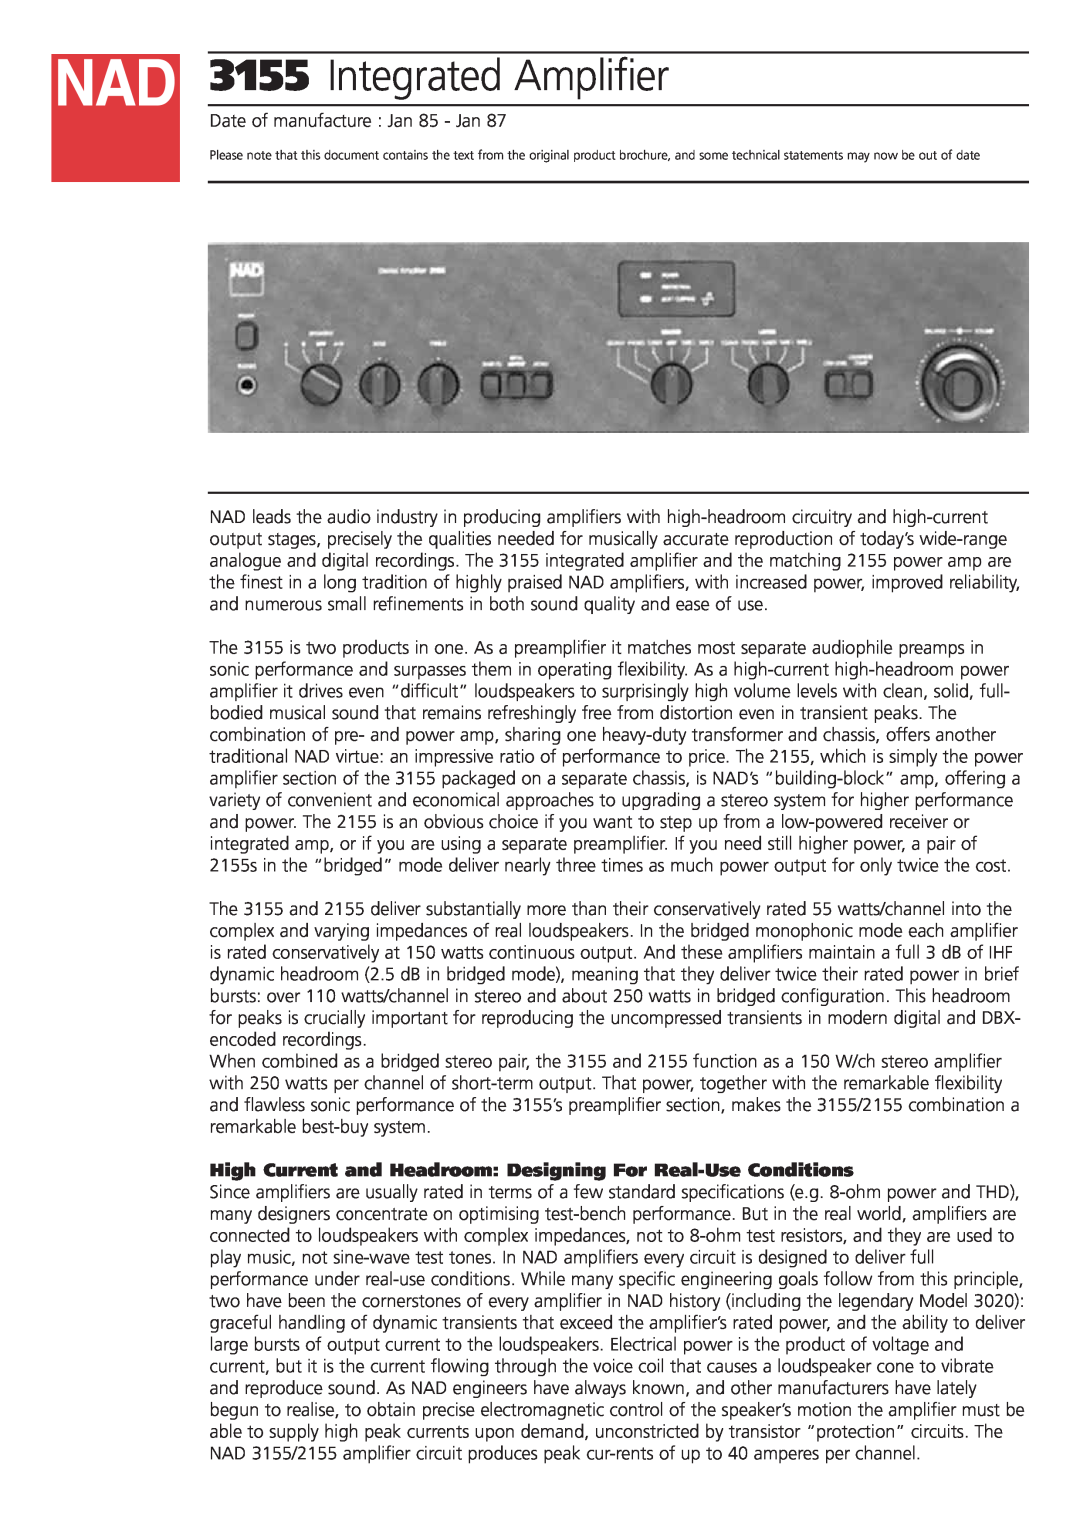 NAD 3155 brochure Integrated Amplifier 